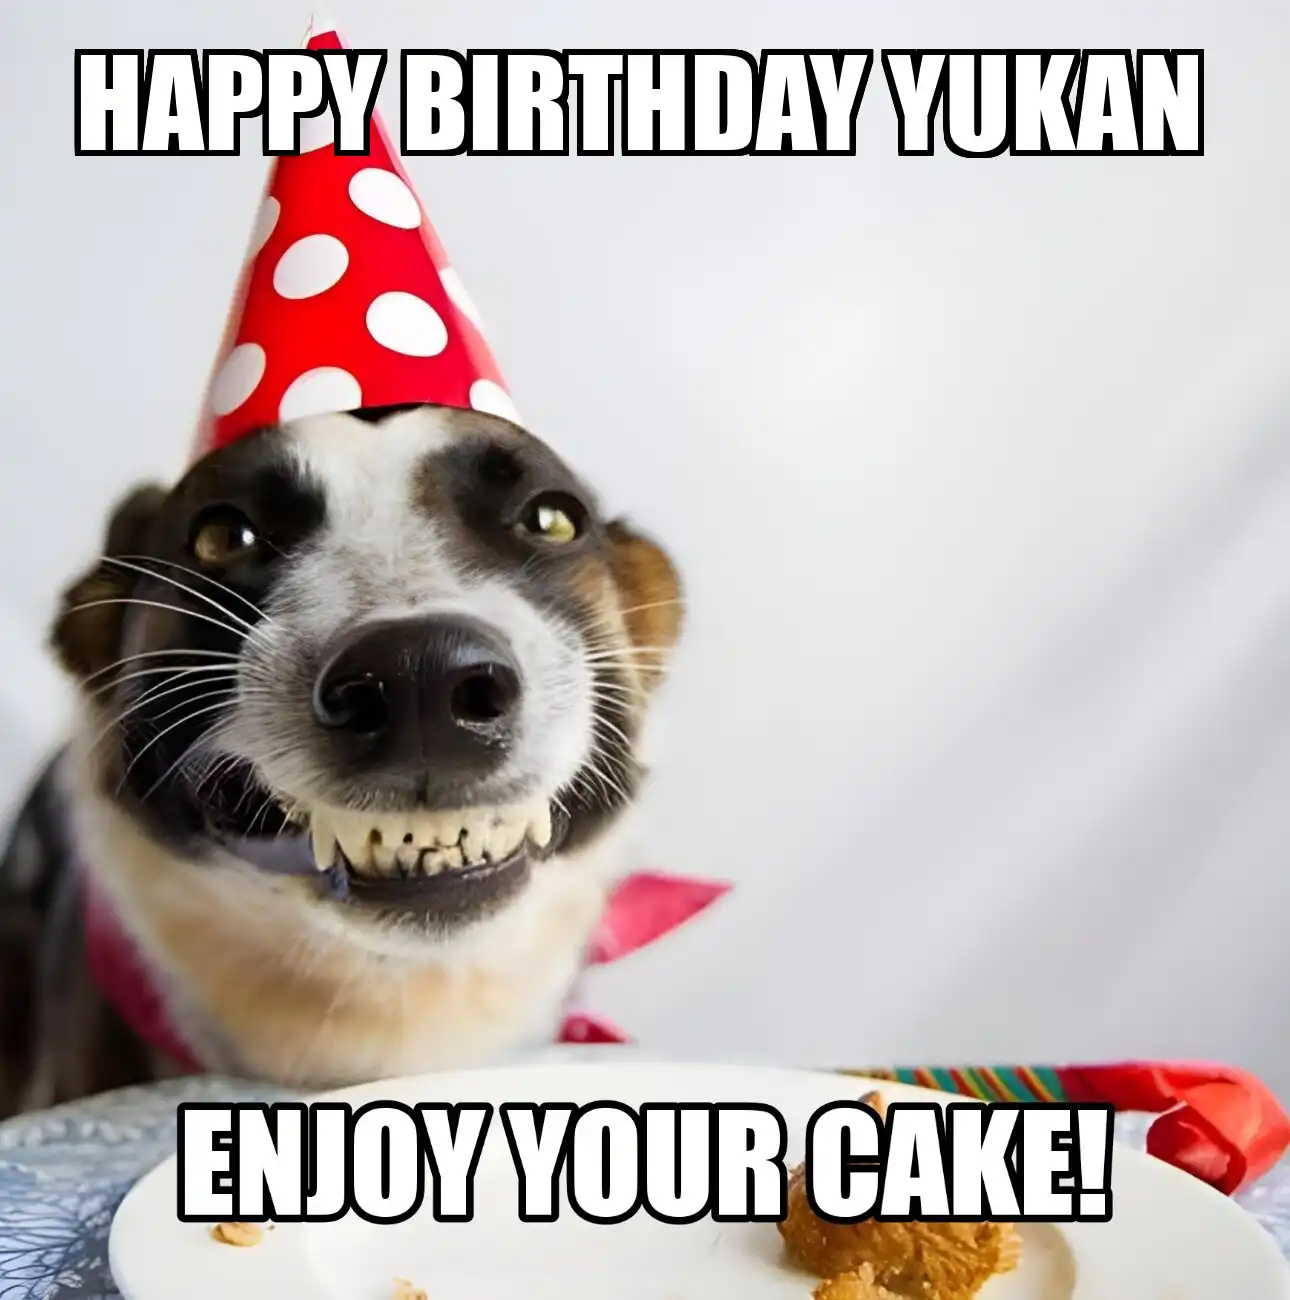 Happy Birthday Yukan Enjoy Your Cake Dog Meme